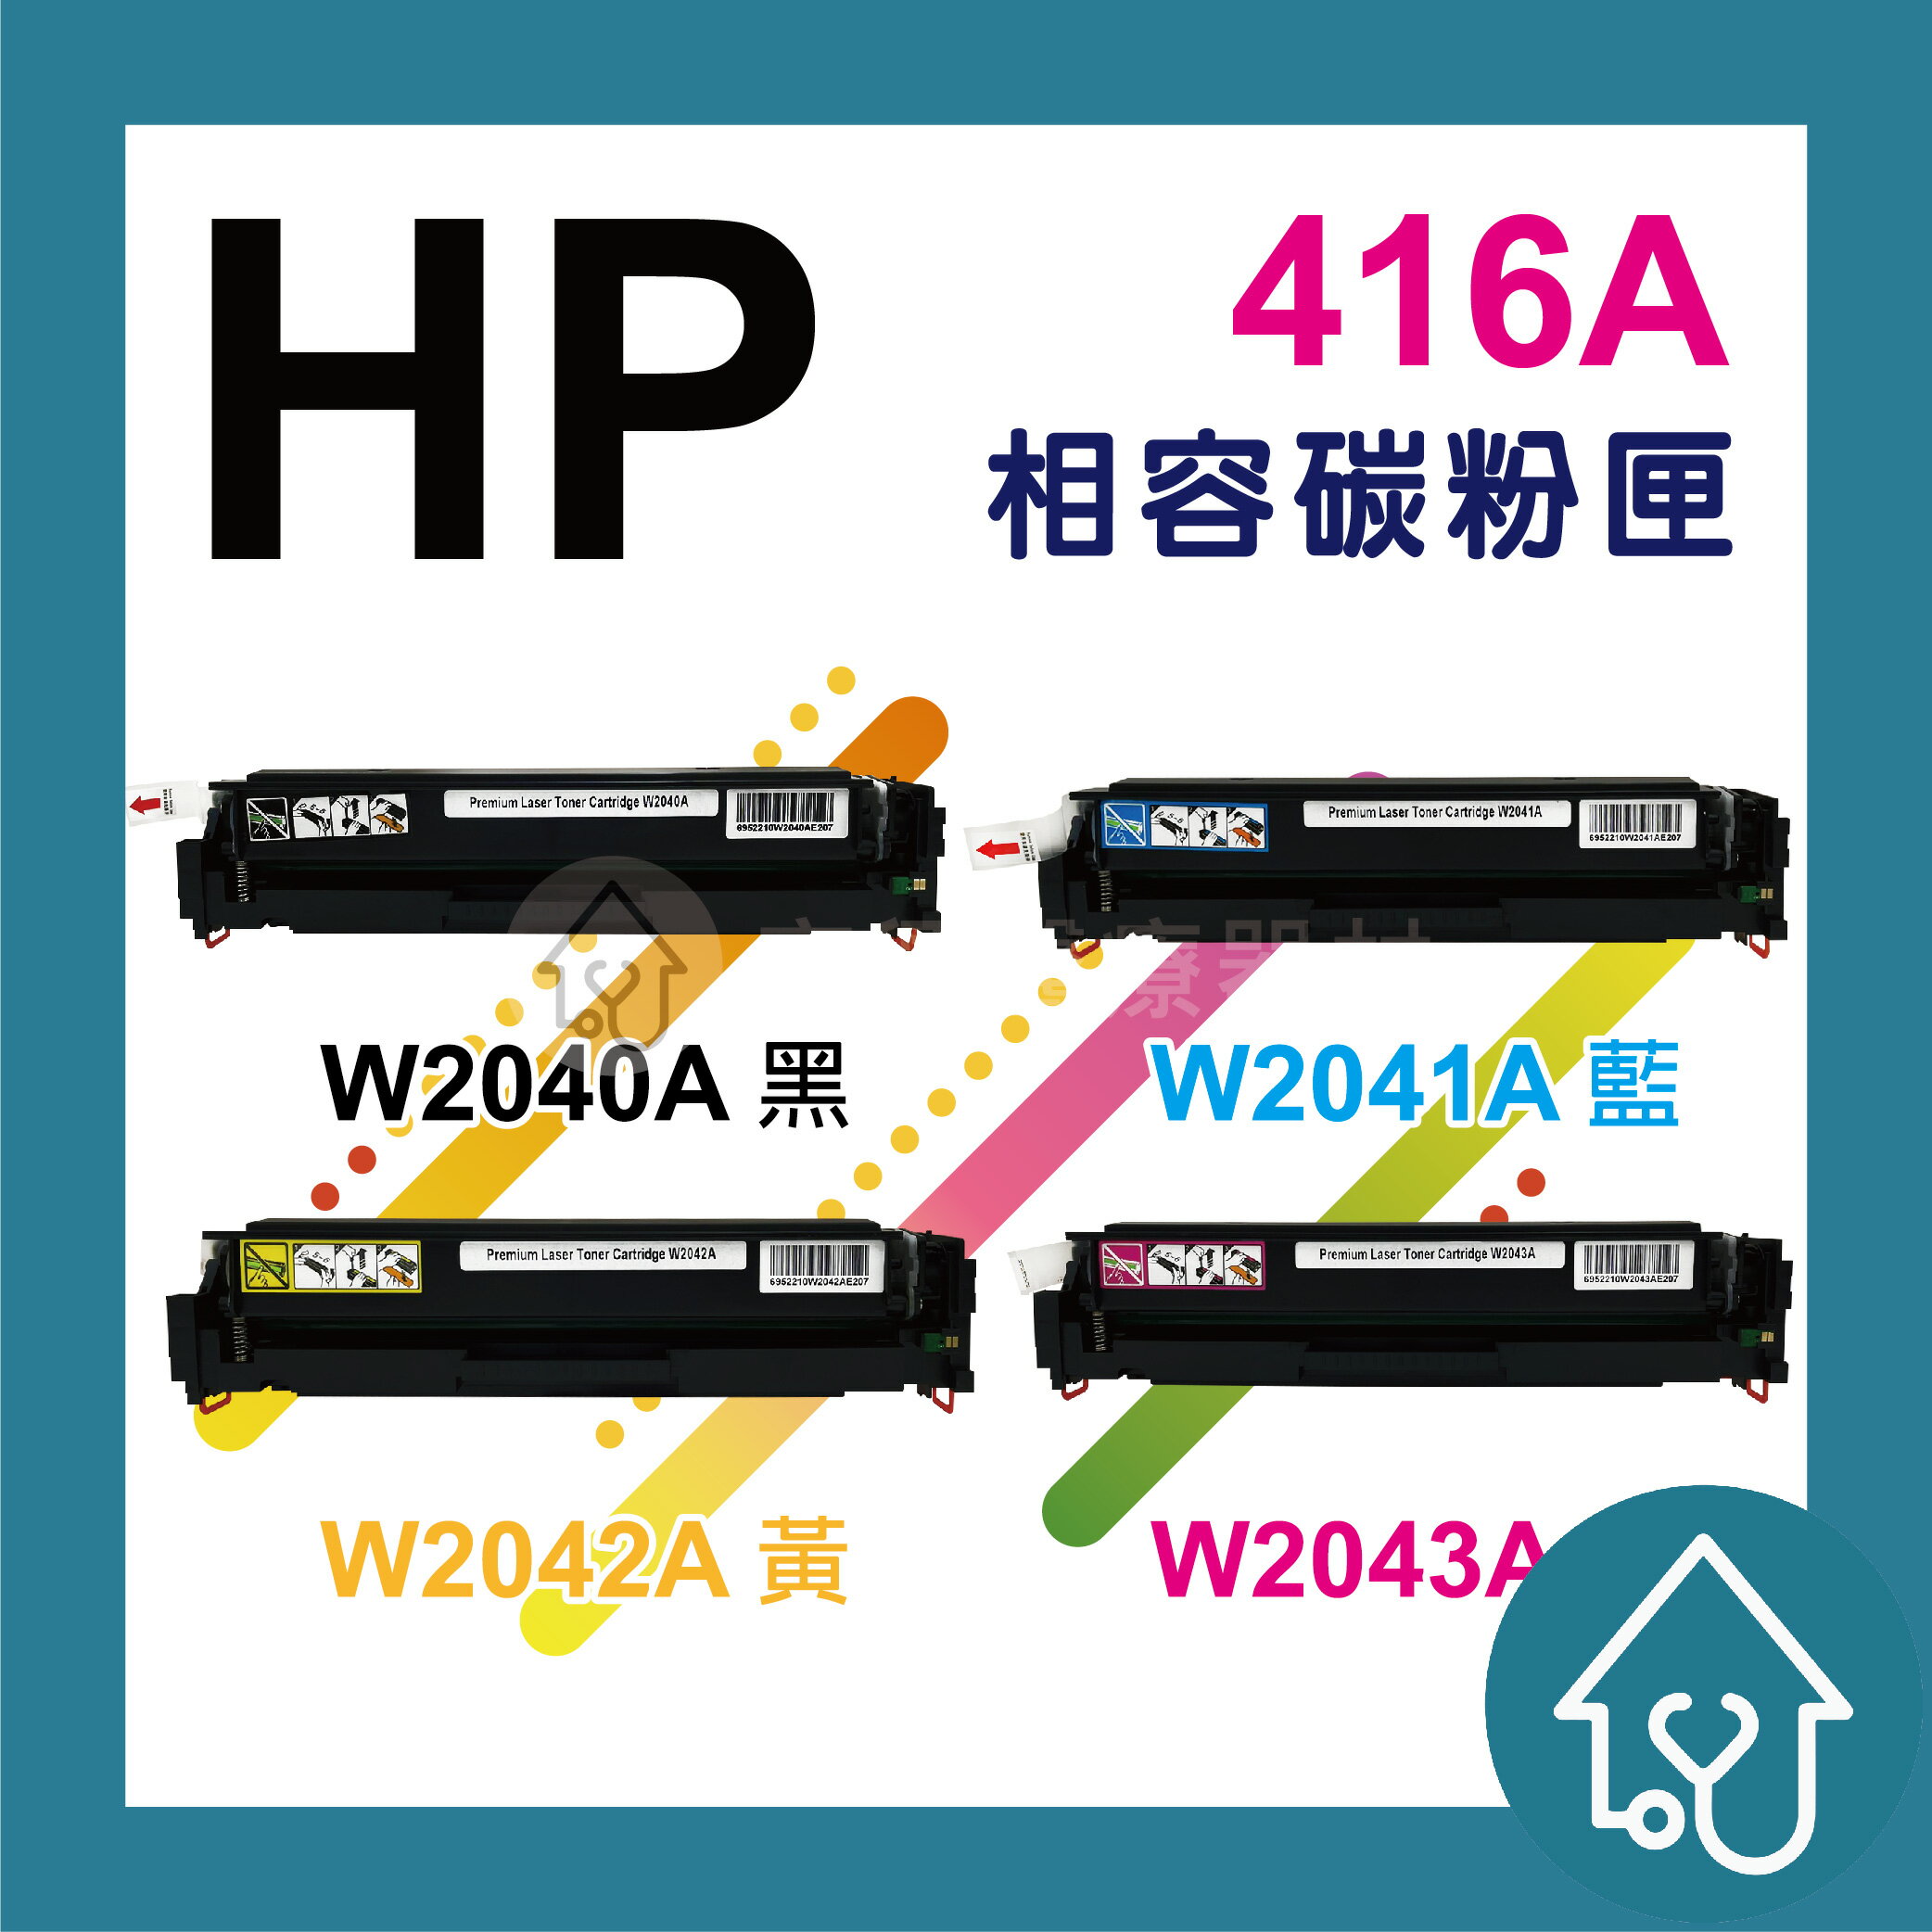 HP 416A(無晶片) 副廠碳粉匣 W2040A黑色/W2041A藍色/W2042A黃色/W2043A紅色 HP LaserJet Pro M454nw/M454dn/M454dw/MFP M479dw/M479fnw/M479fdw 雷射印表機